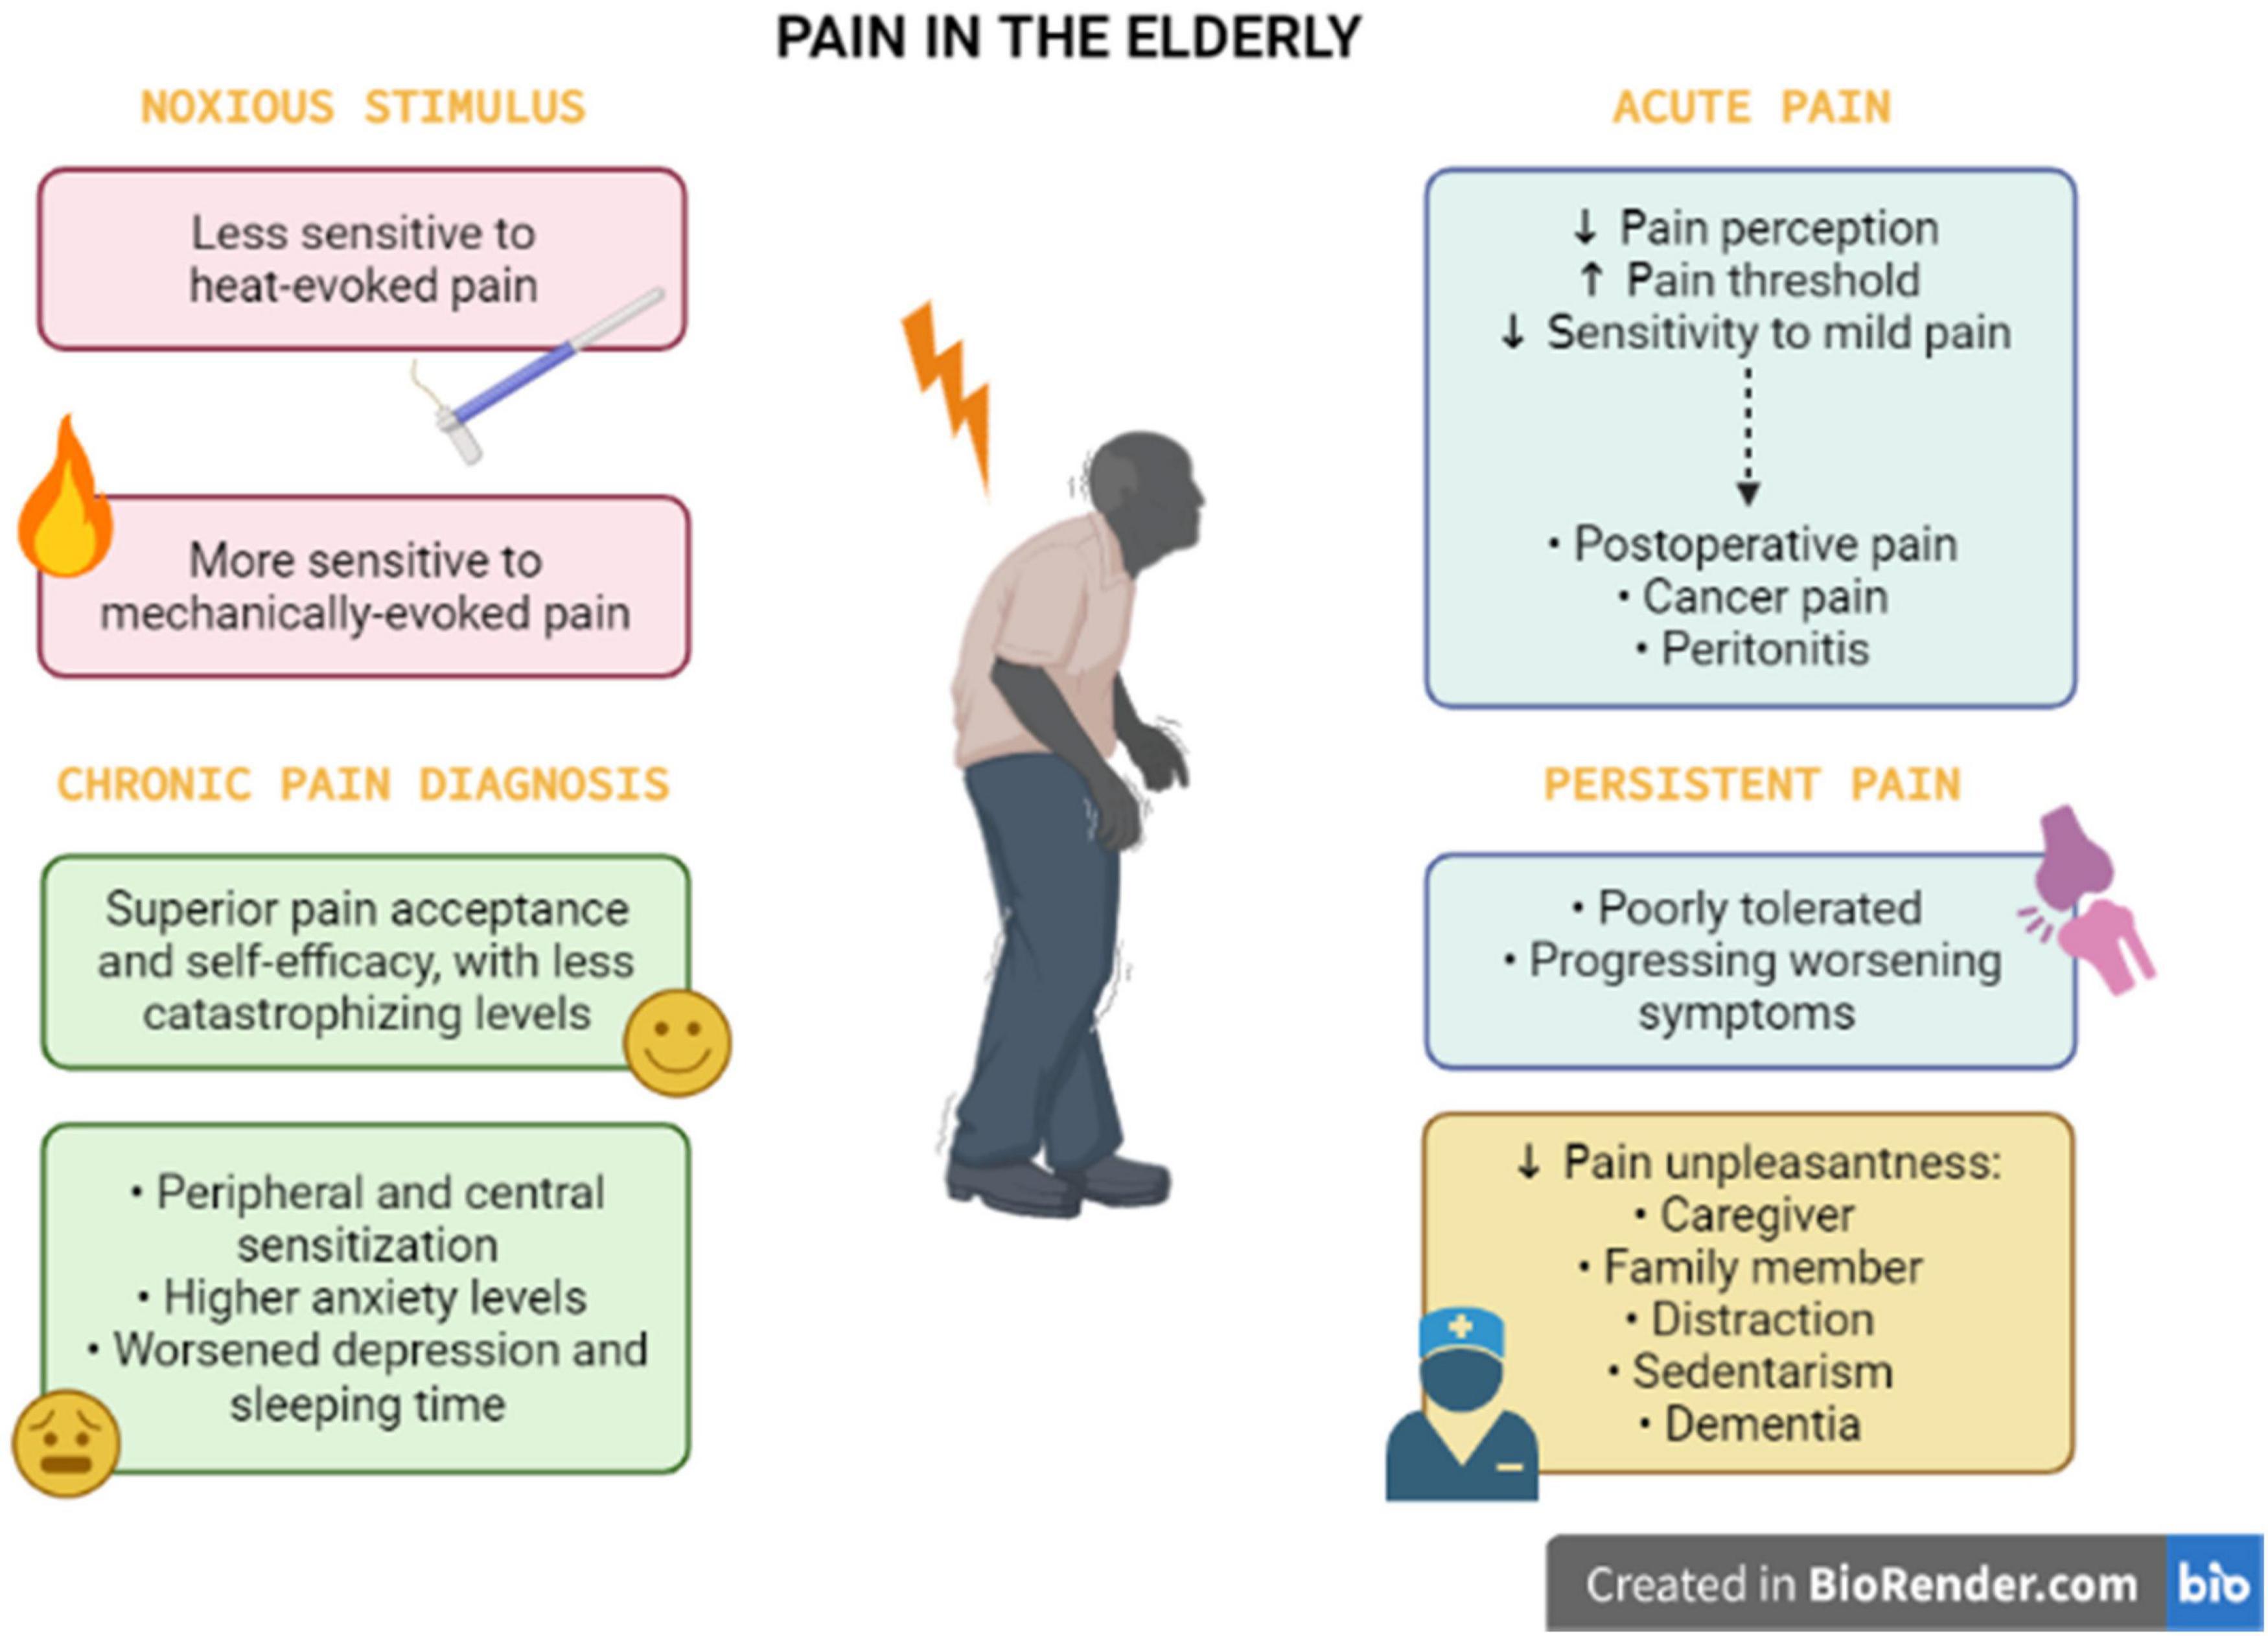 Low back pain: a major global challenge - The Lancet